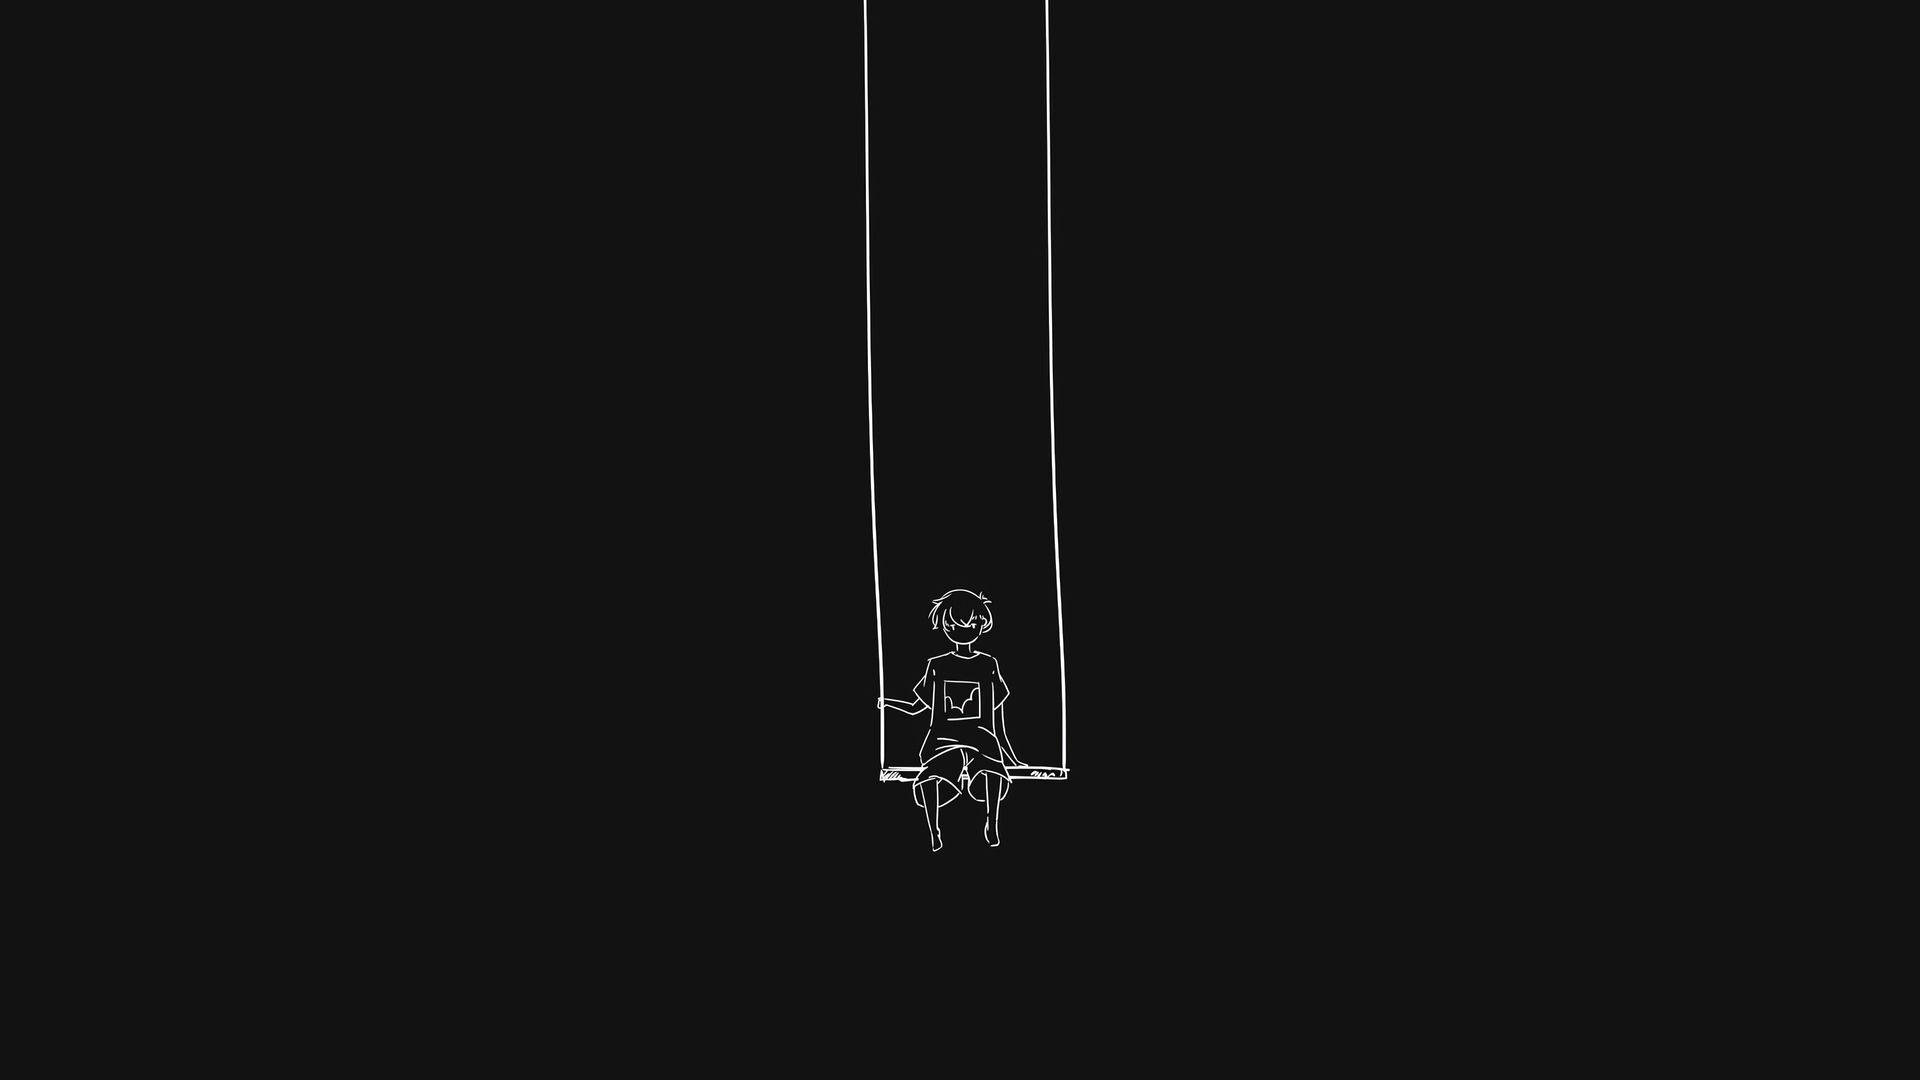 Dark Laptop Boy Riding A Swing Background